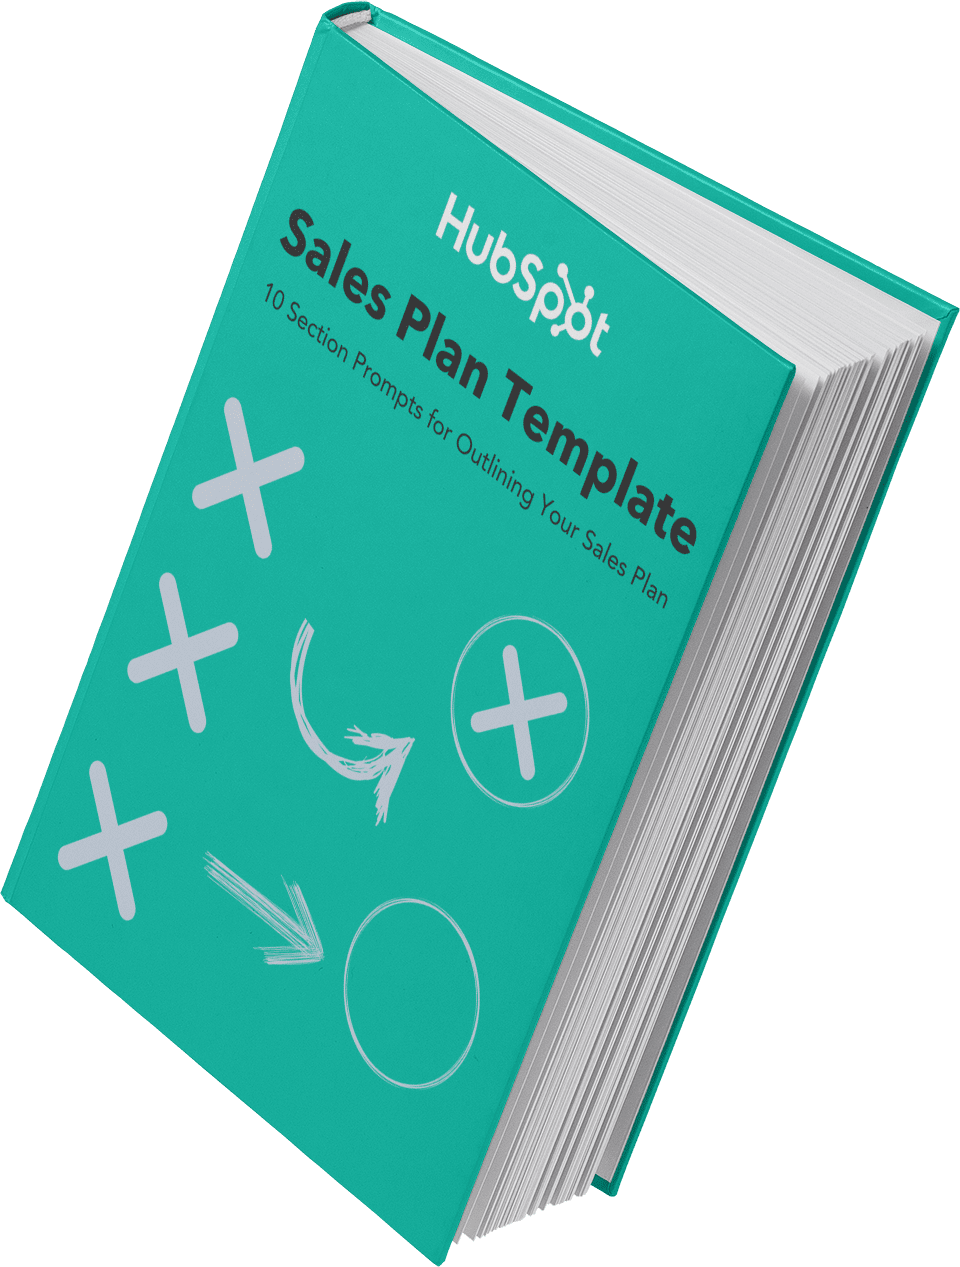 Business development strategic sales plan example